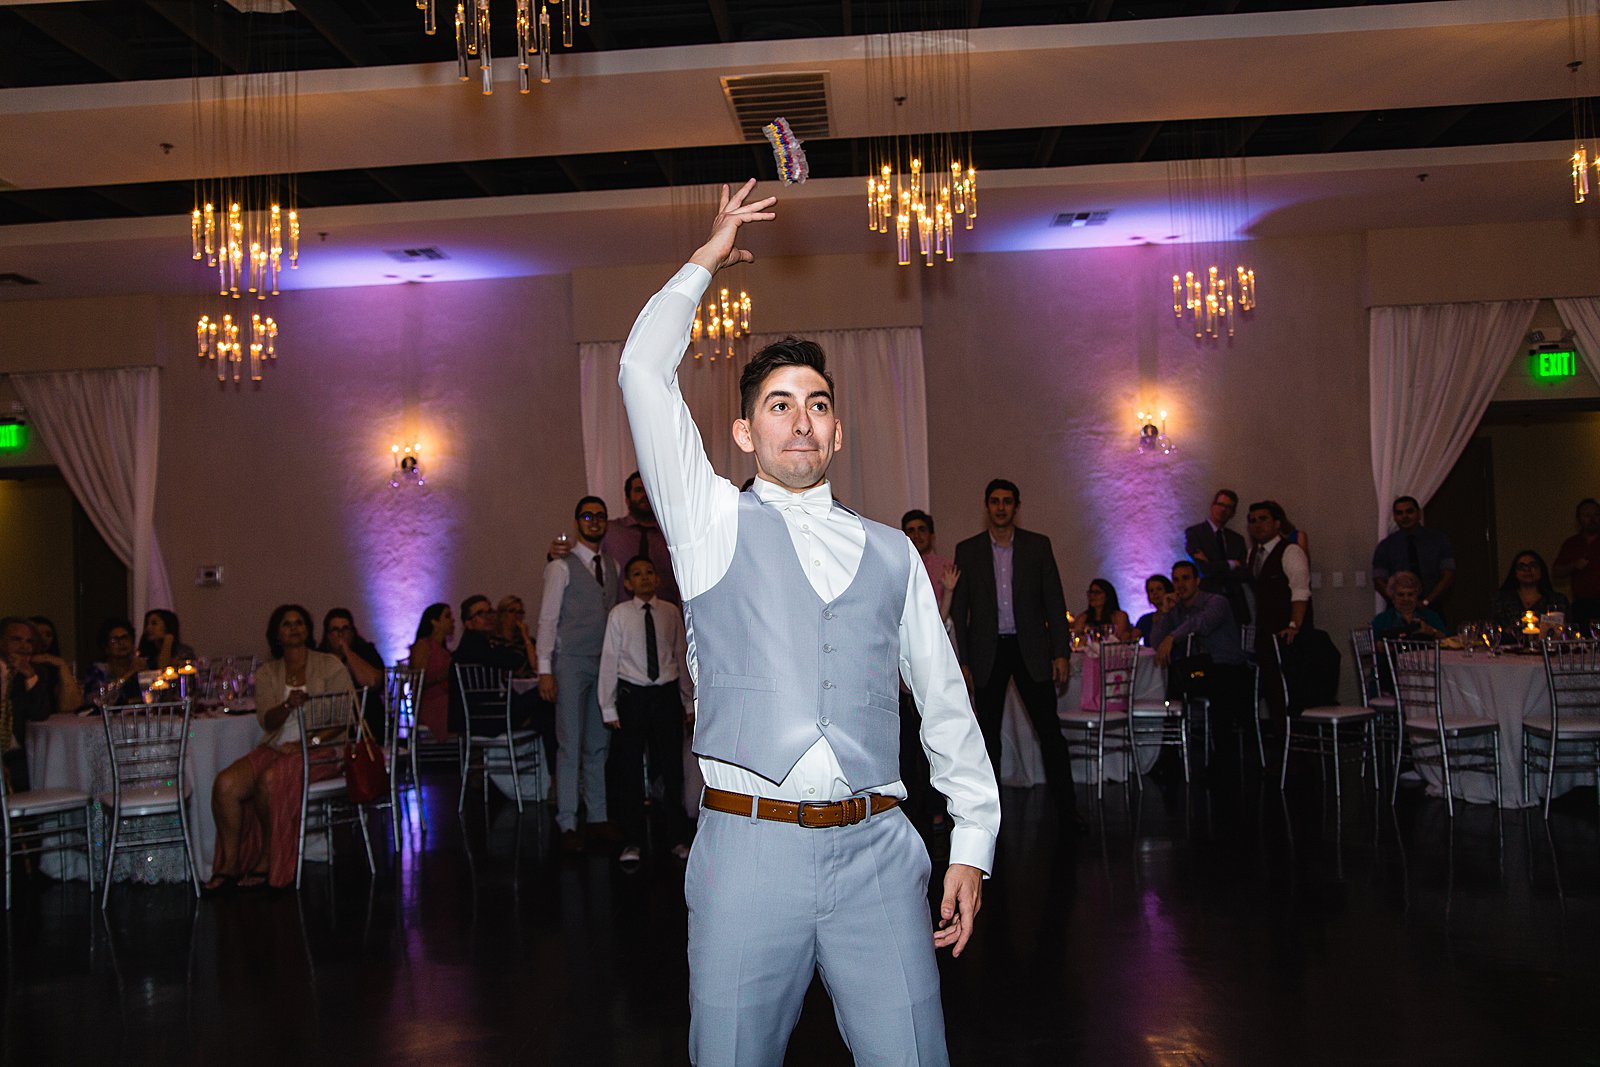 Garter toss at SoHo63 wedding reception by Chandler wedding photographer PMA Photography.